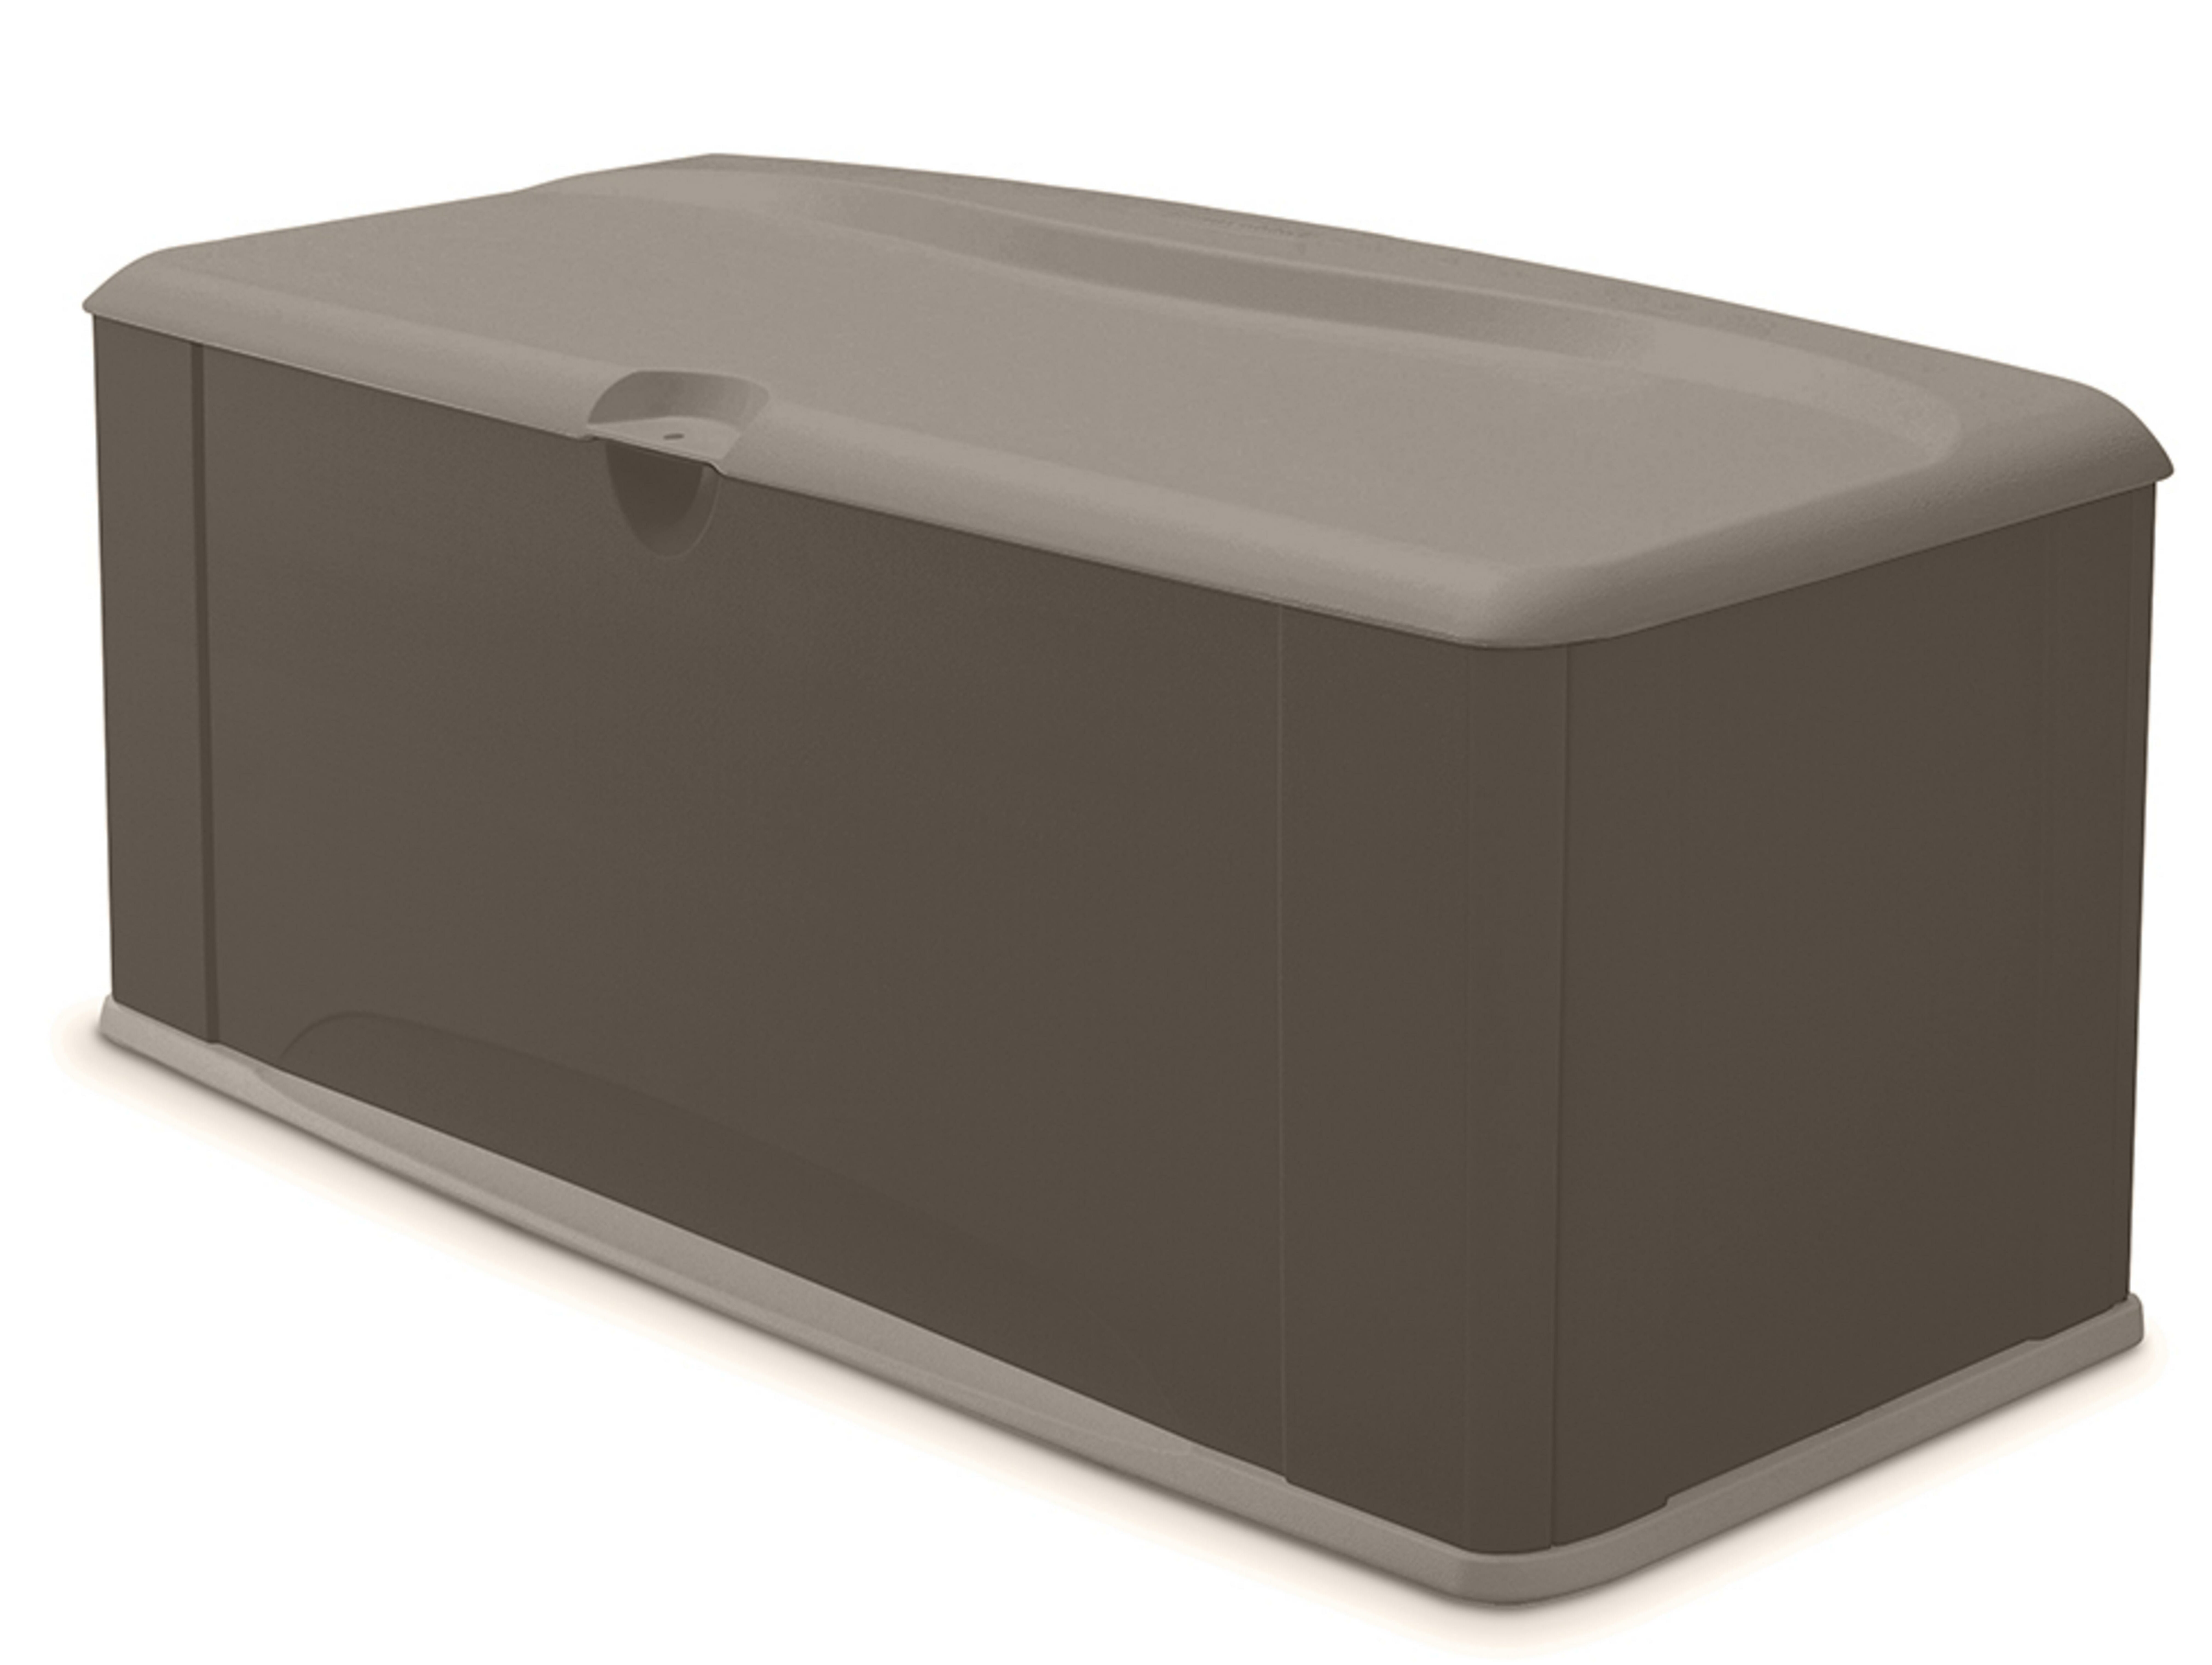 Rubbermaid 120 Gallons Water Resistant Plastic Lockable Deck Box in Brown